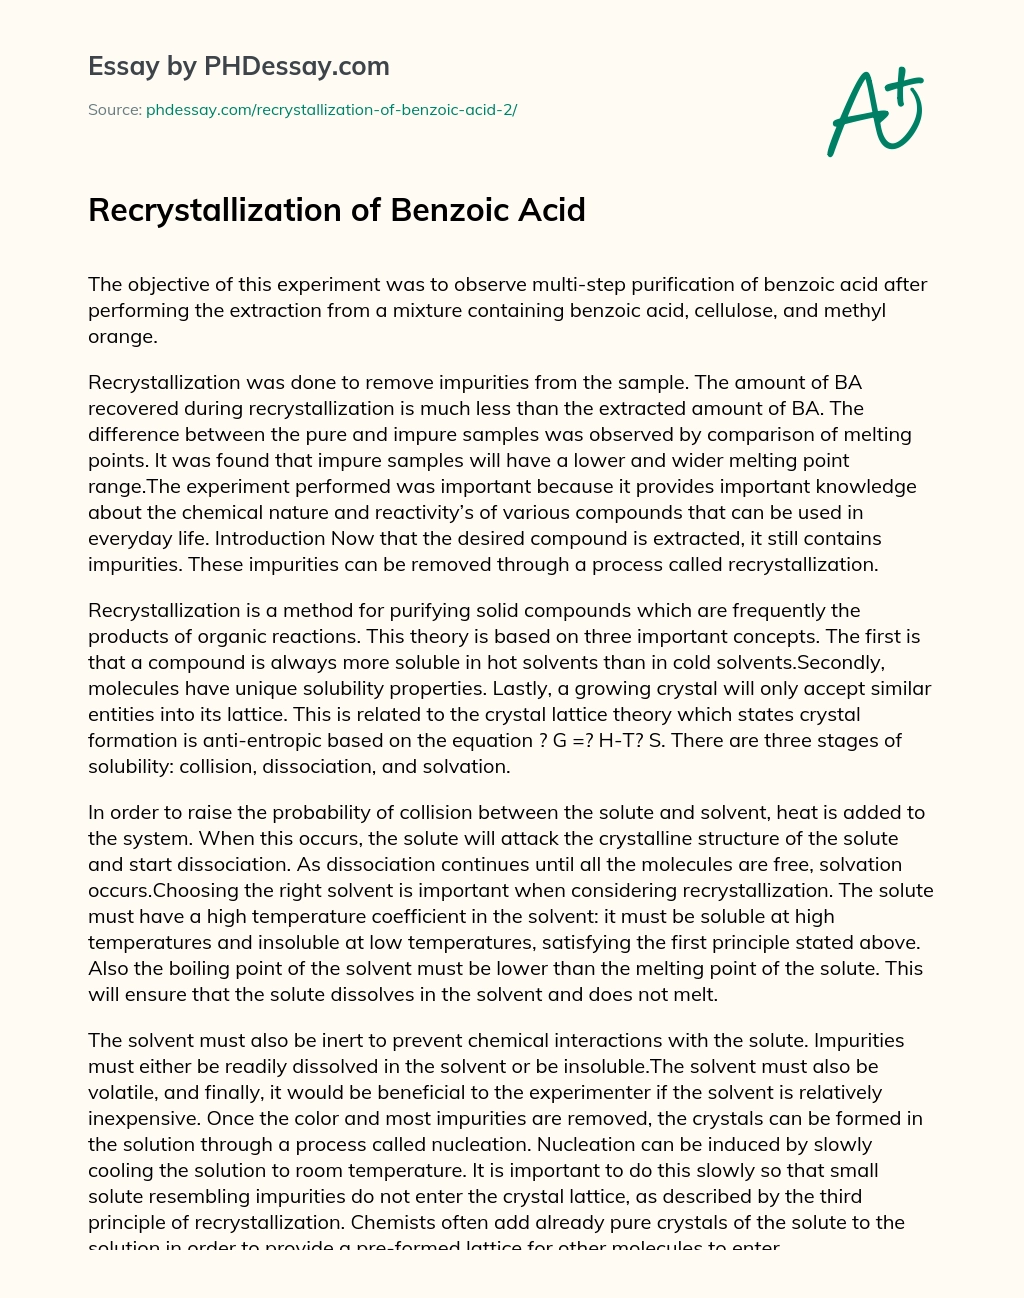 Recrystallization of Benzoic Acid essay